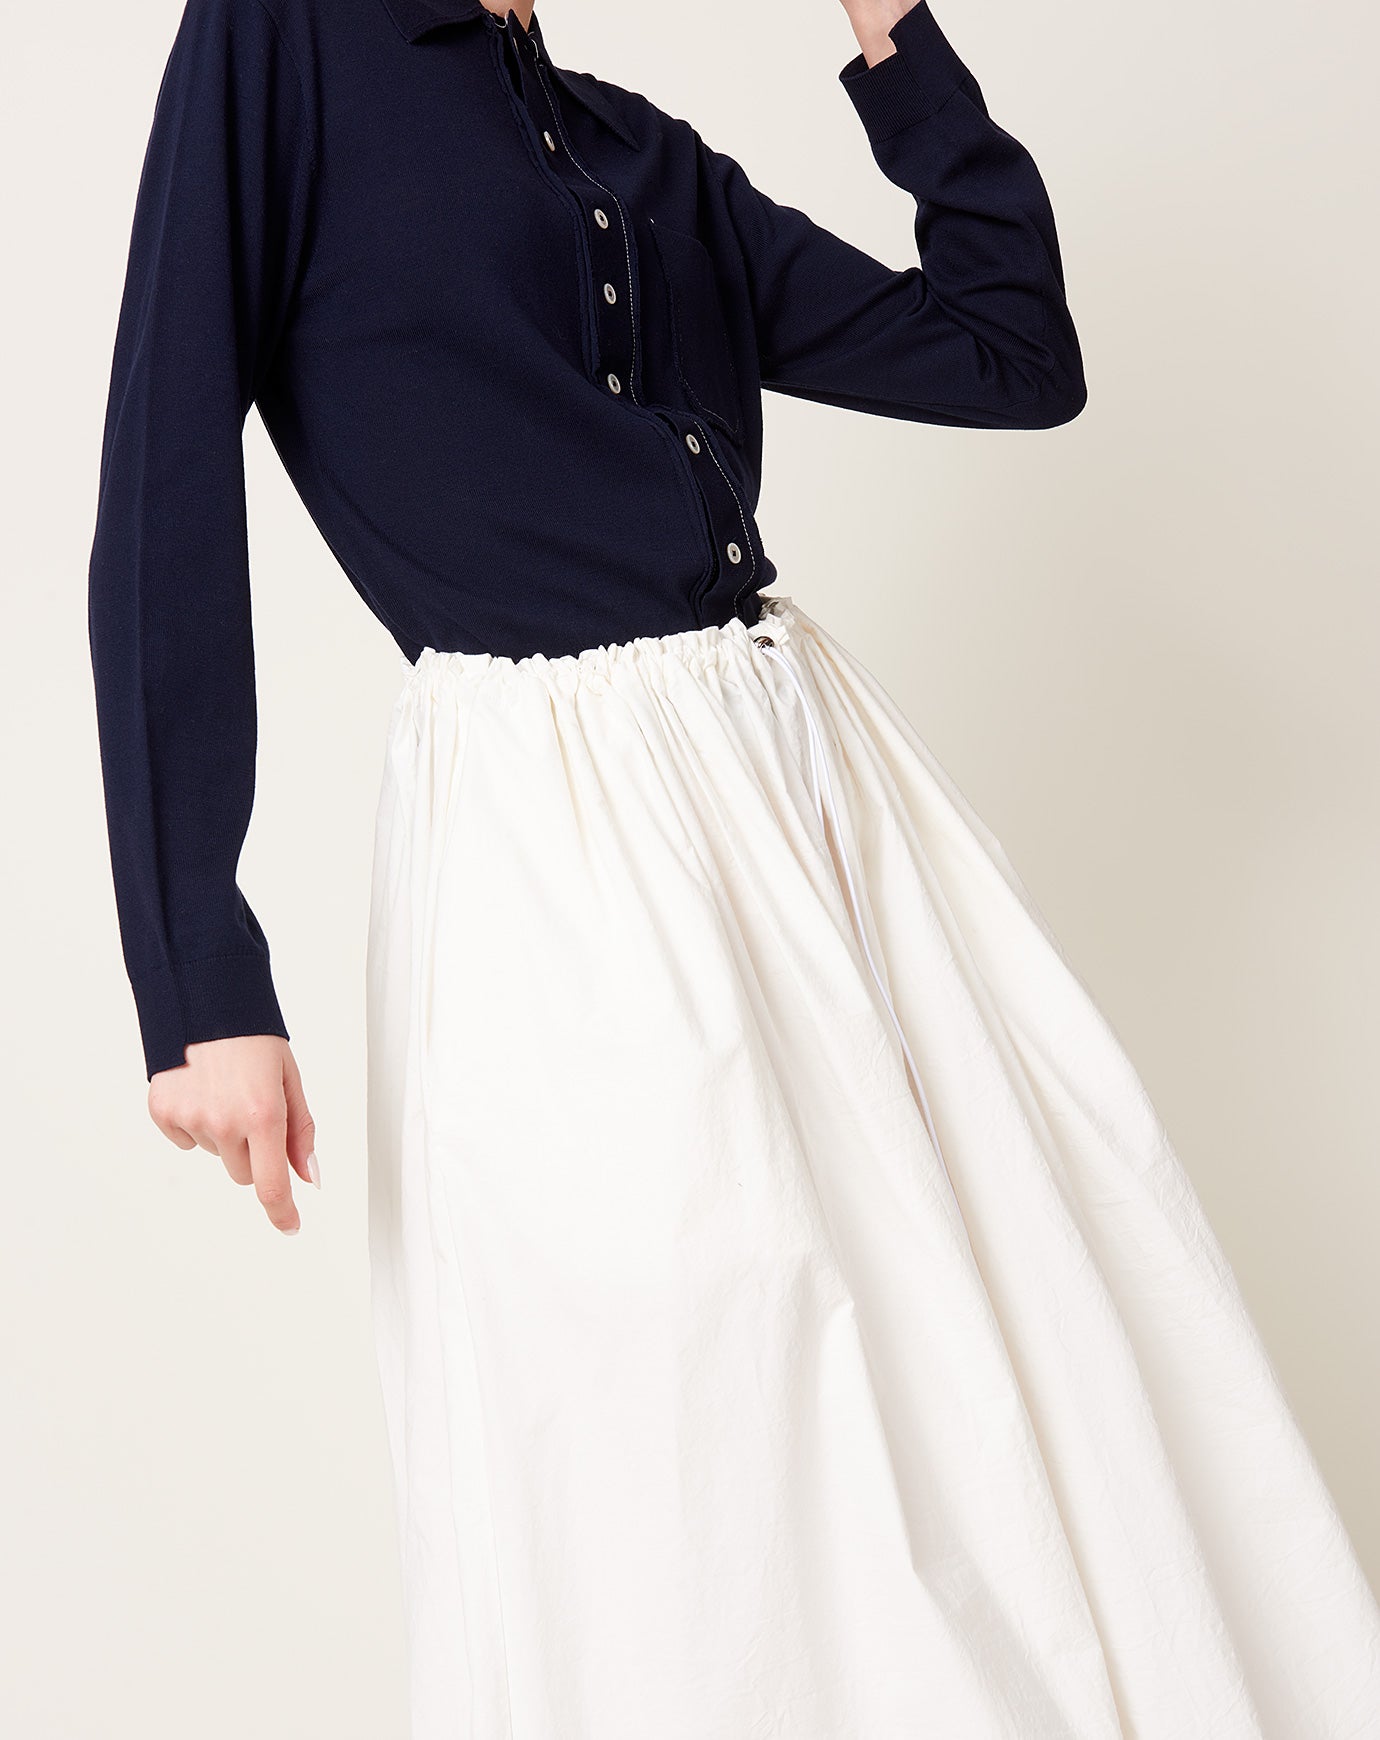 Camiel Fortgens Simple Skirt in Off White